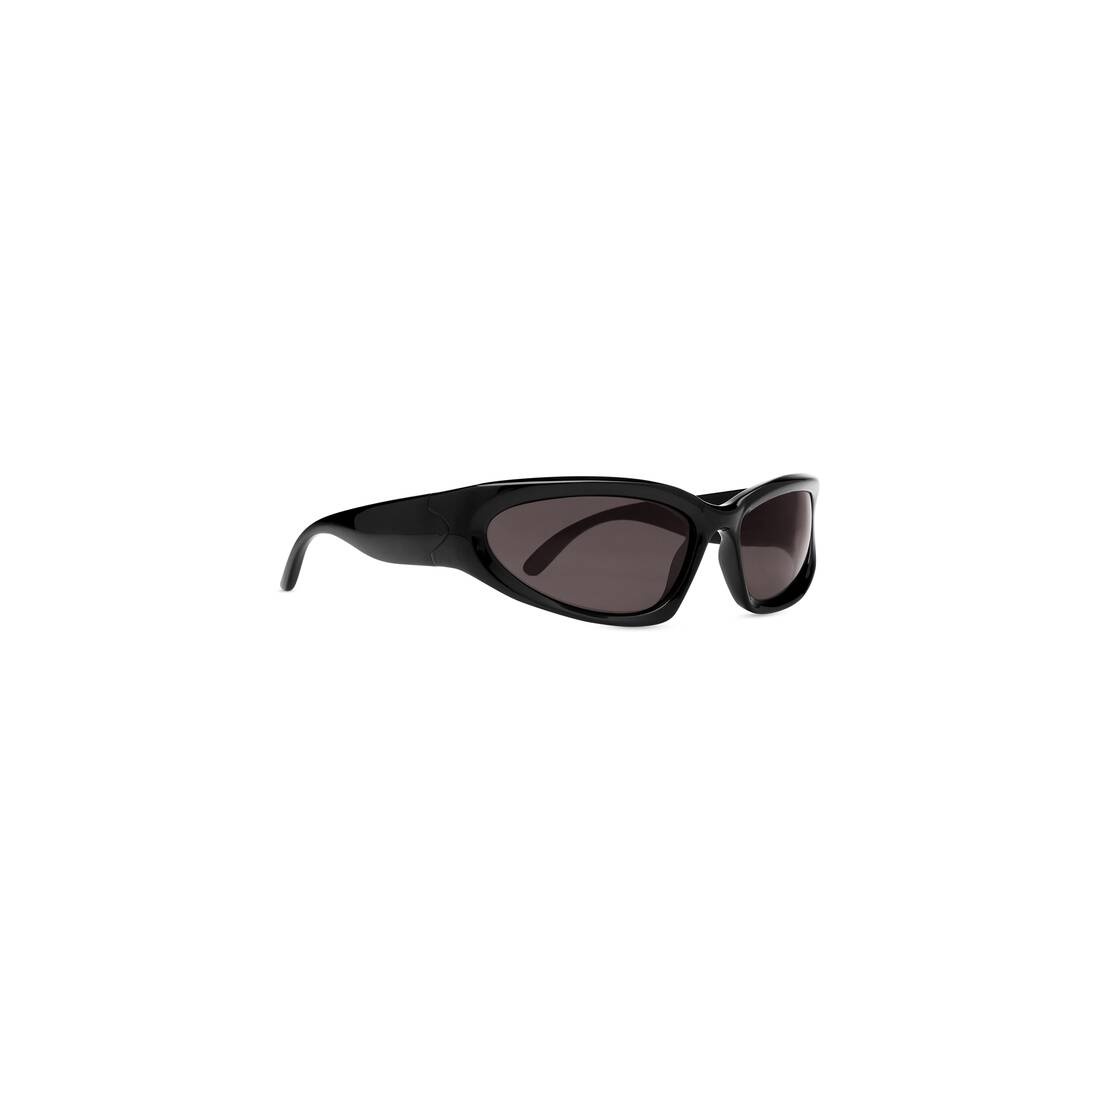 Swift Oval Sunglasses in Black - 2